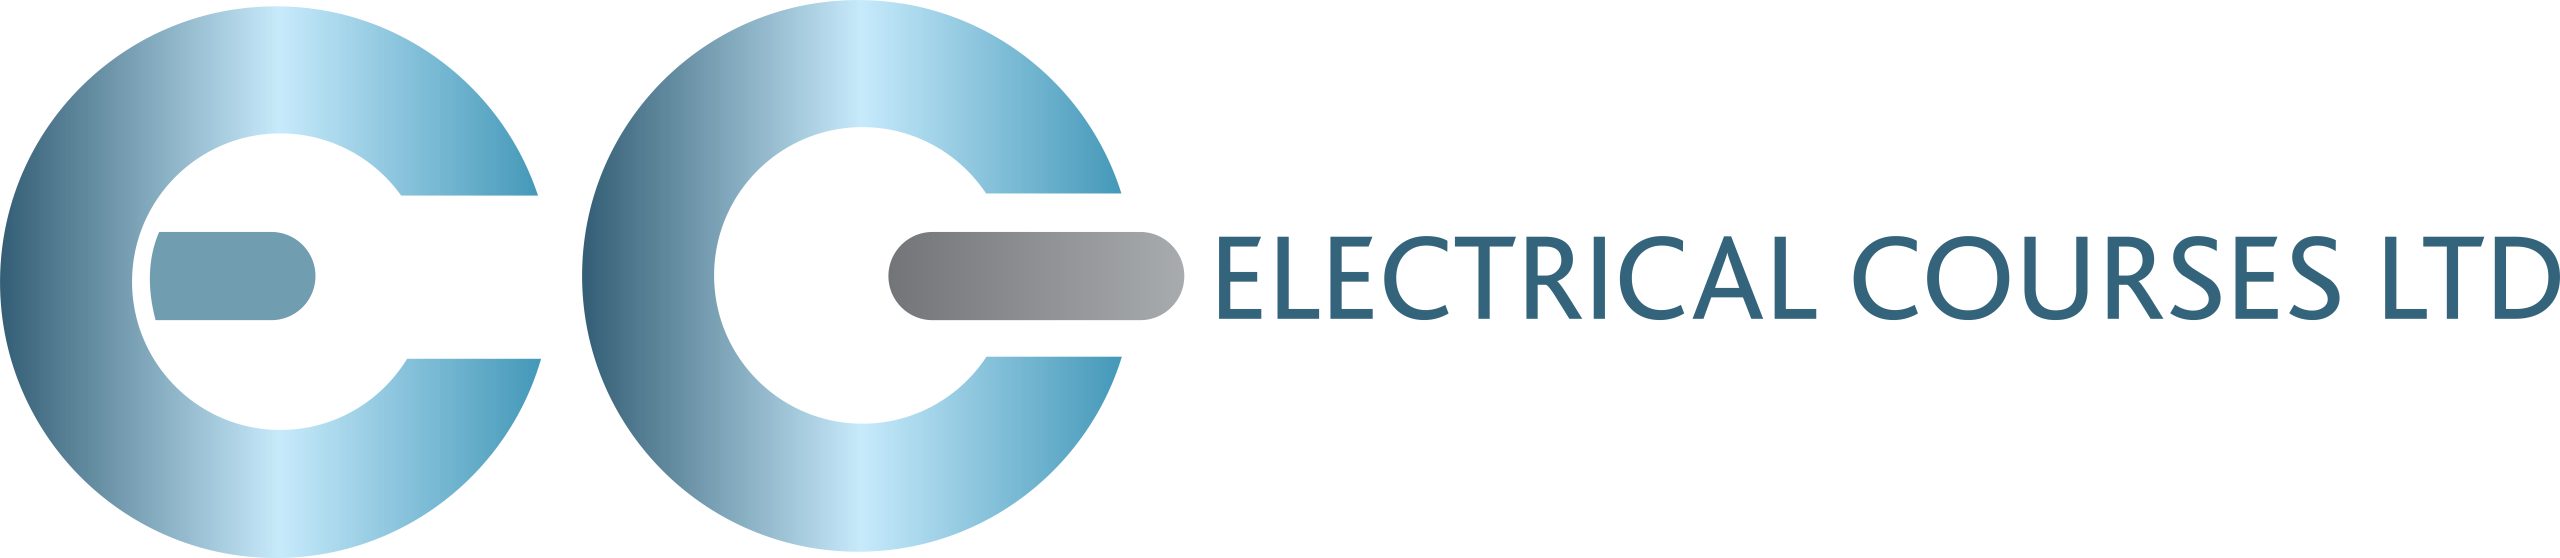 Electrical Courses Ltd logo